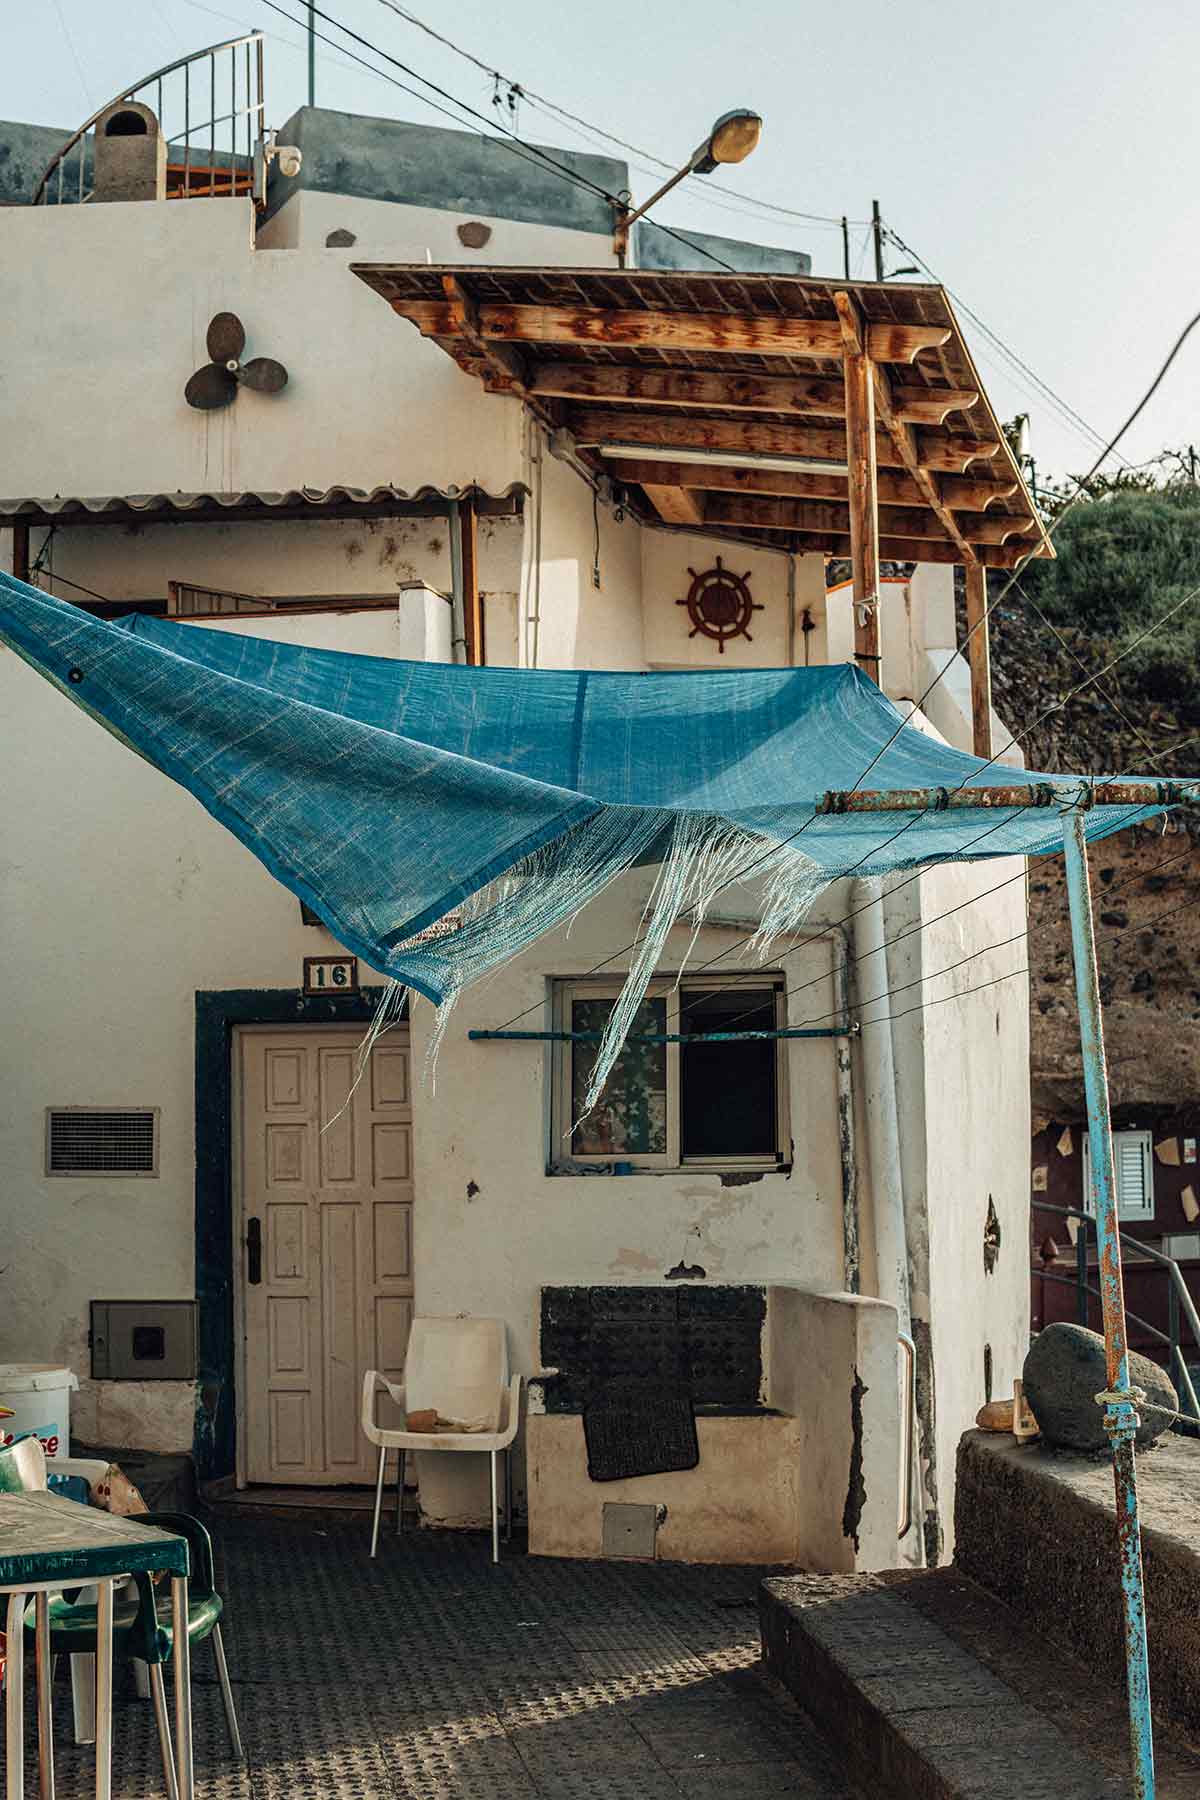 A fisherman's house in El Puertito, Tenerife